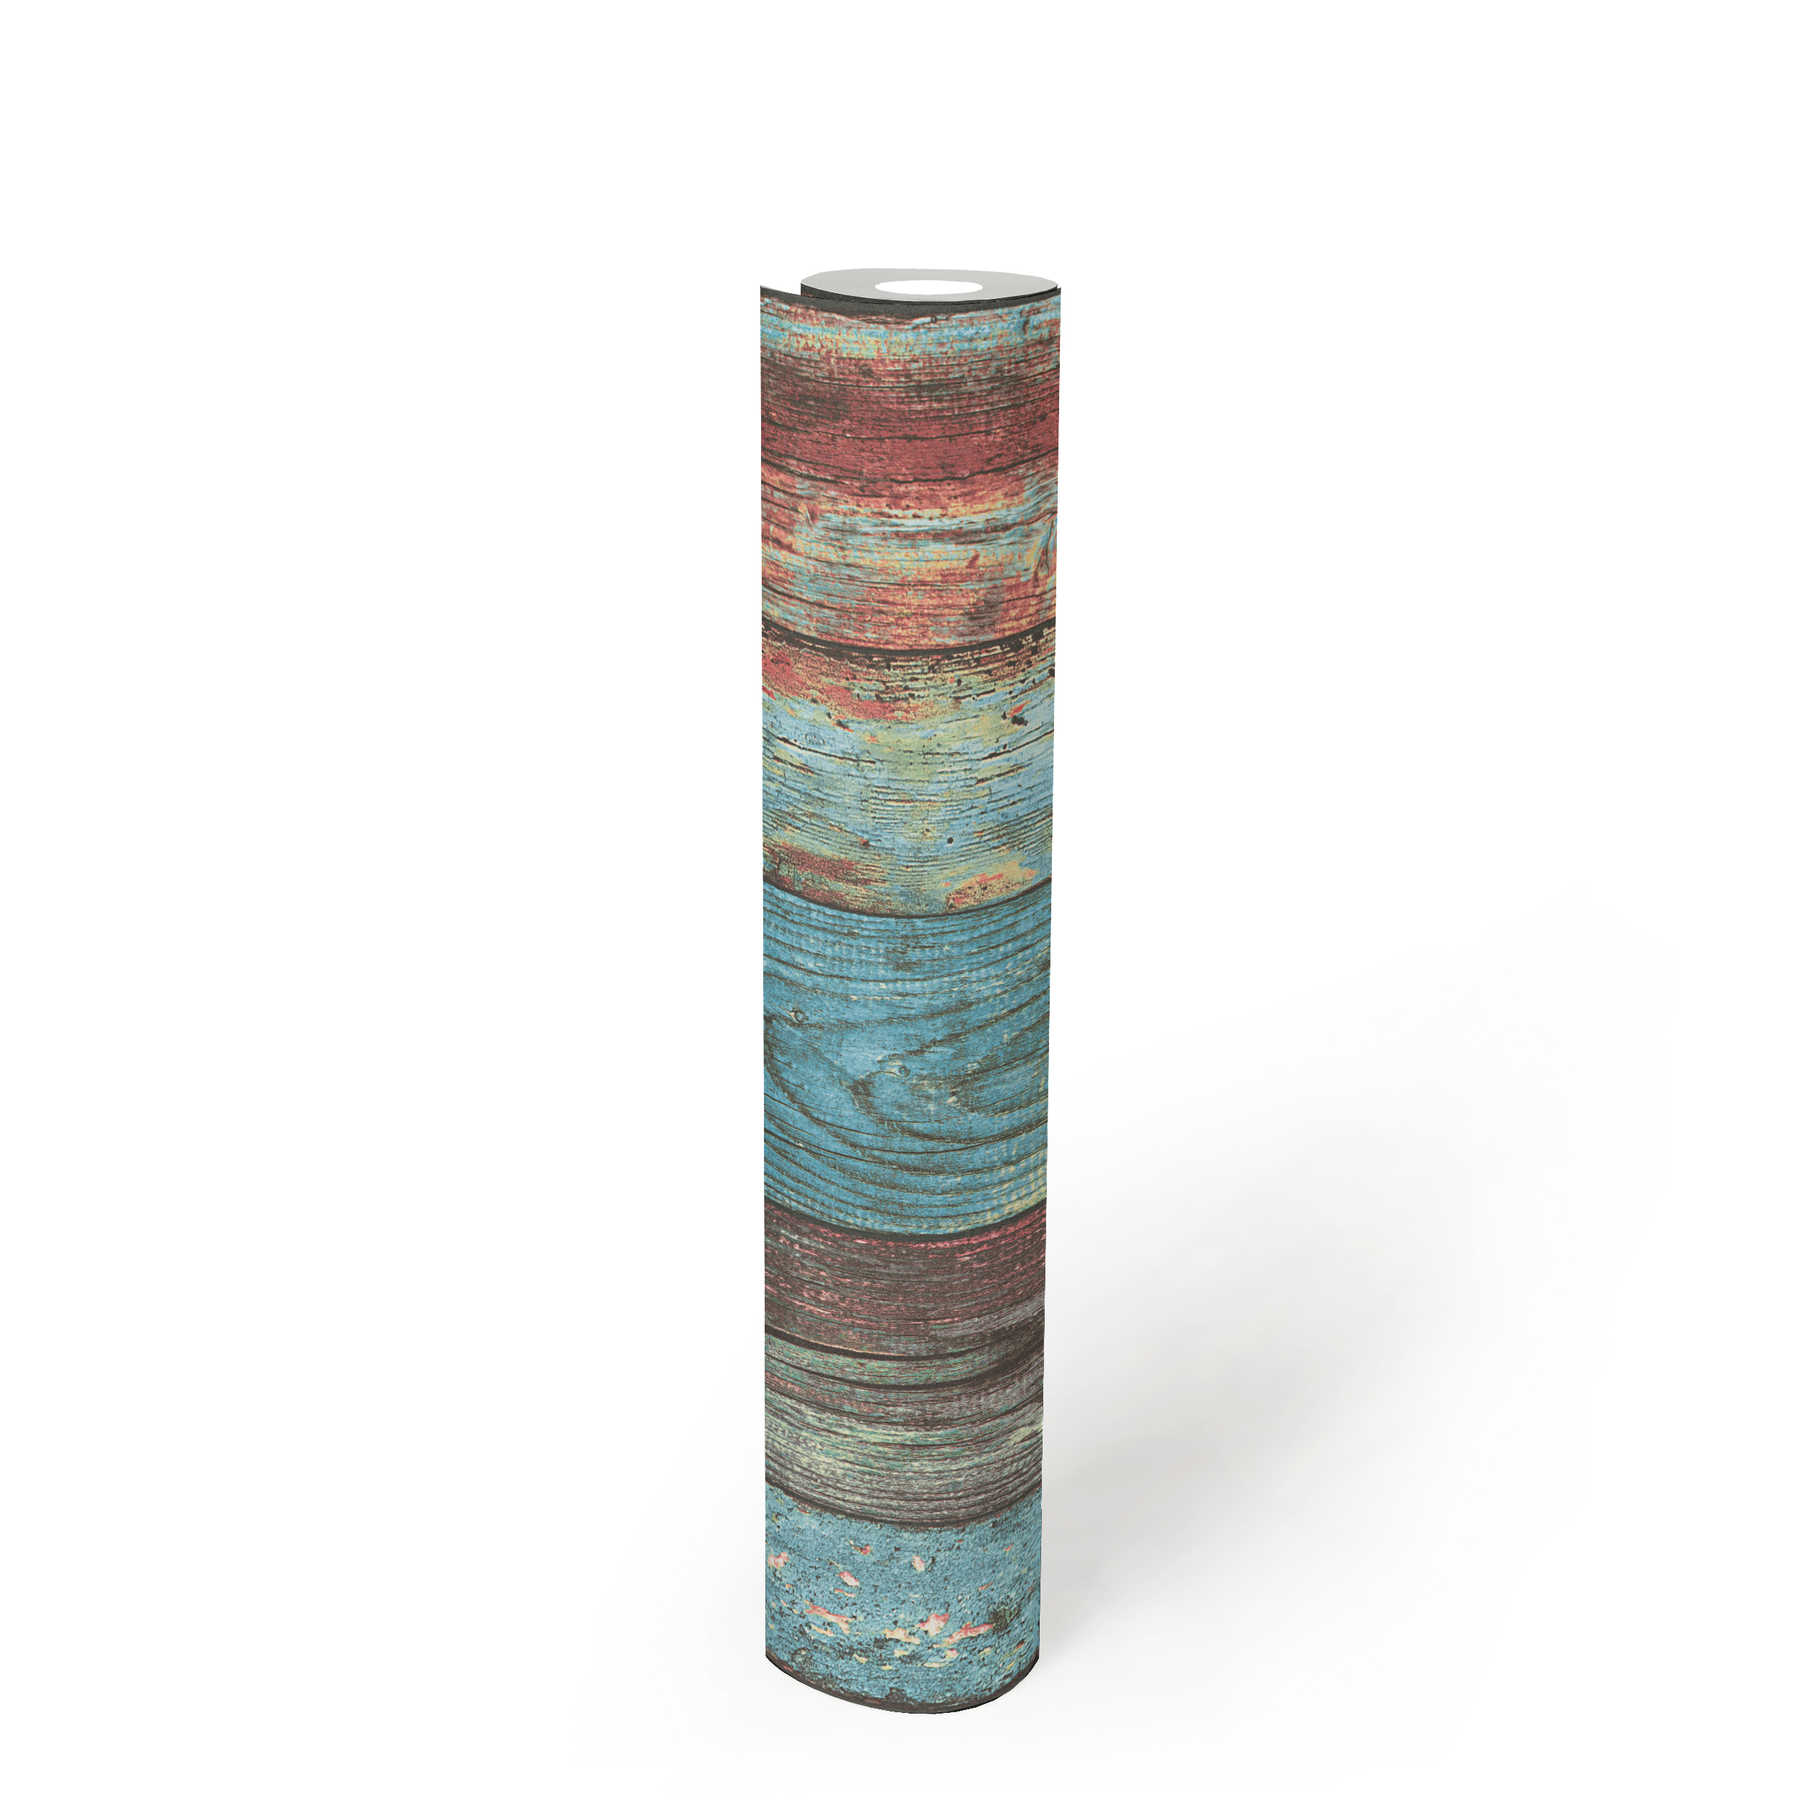             Bunte Holztapete Shabby Chic Style mit Bretter-Muster – Blau, Rot, Braun
        